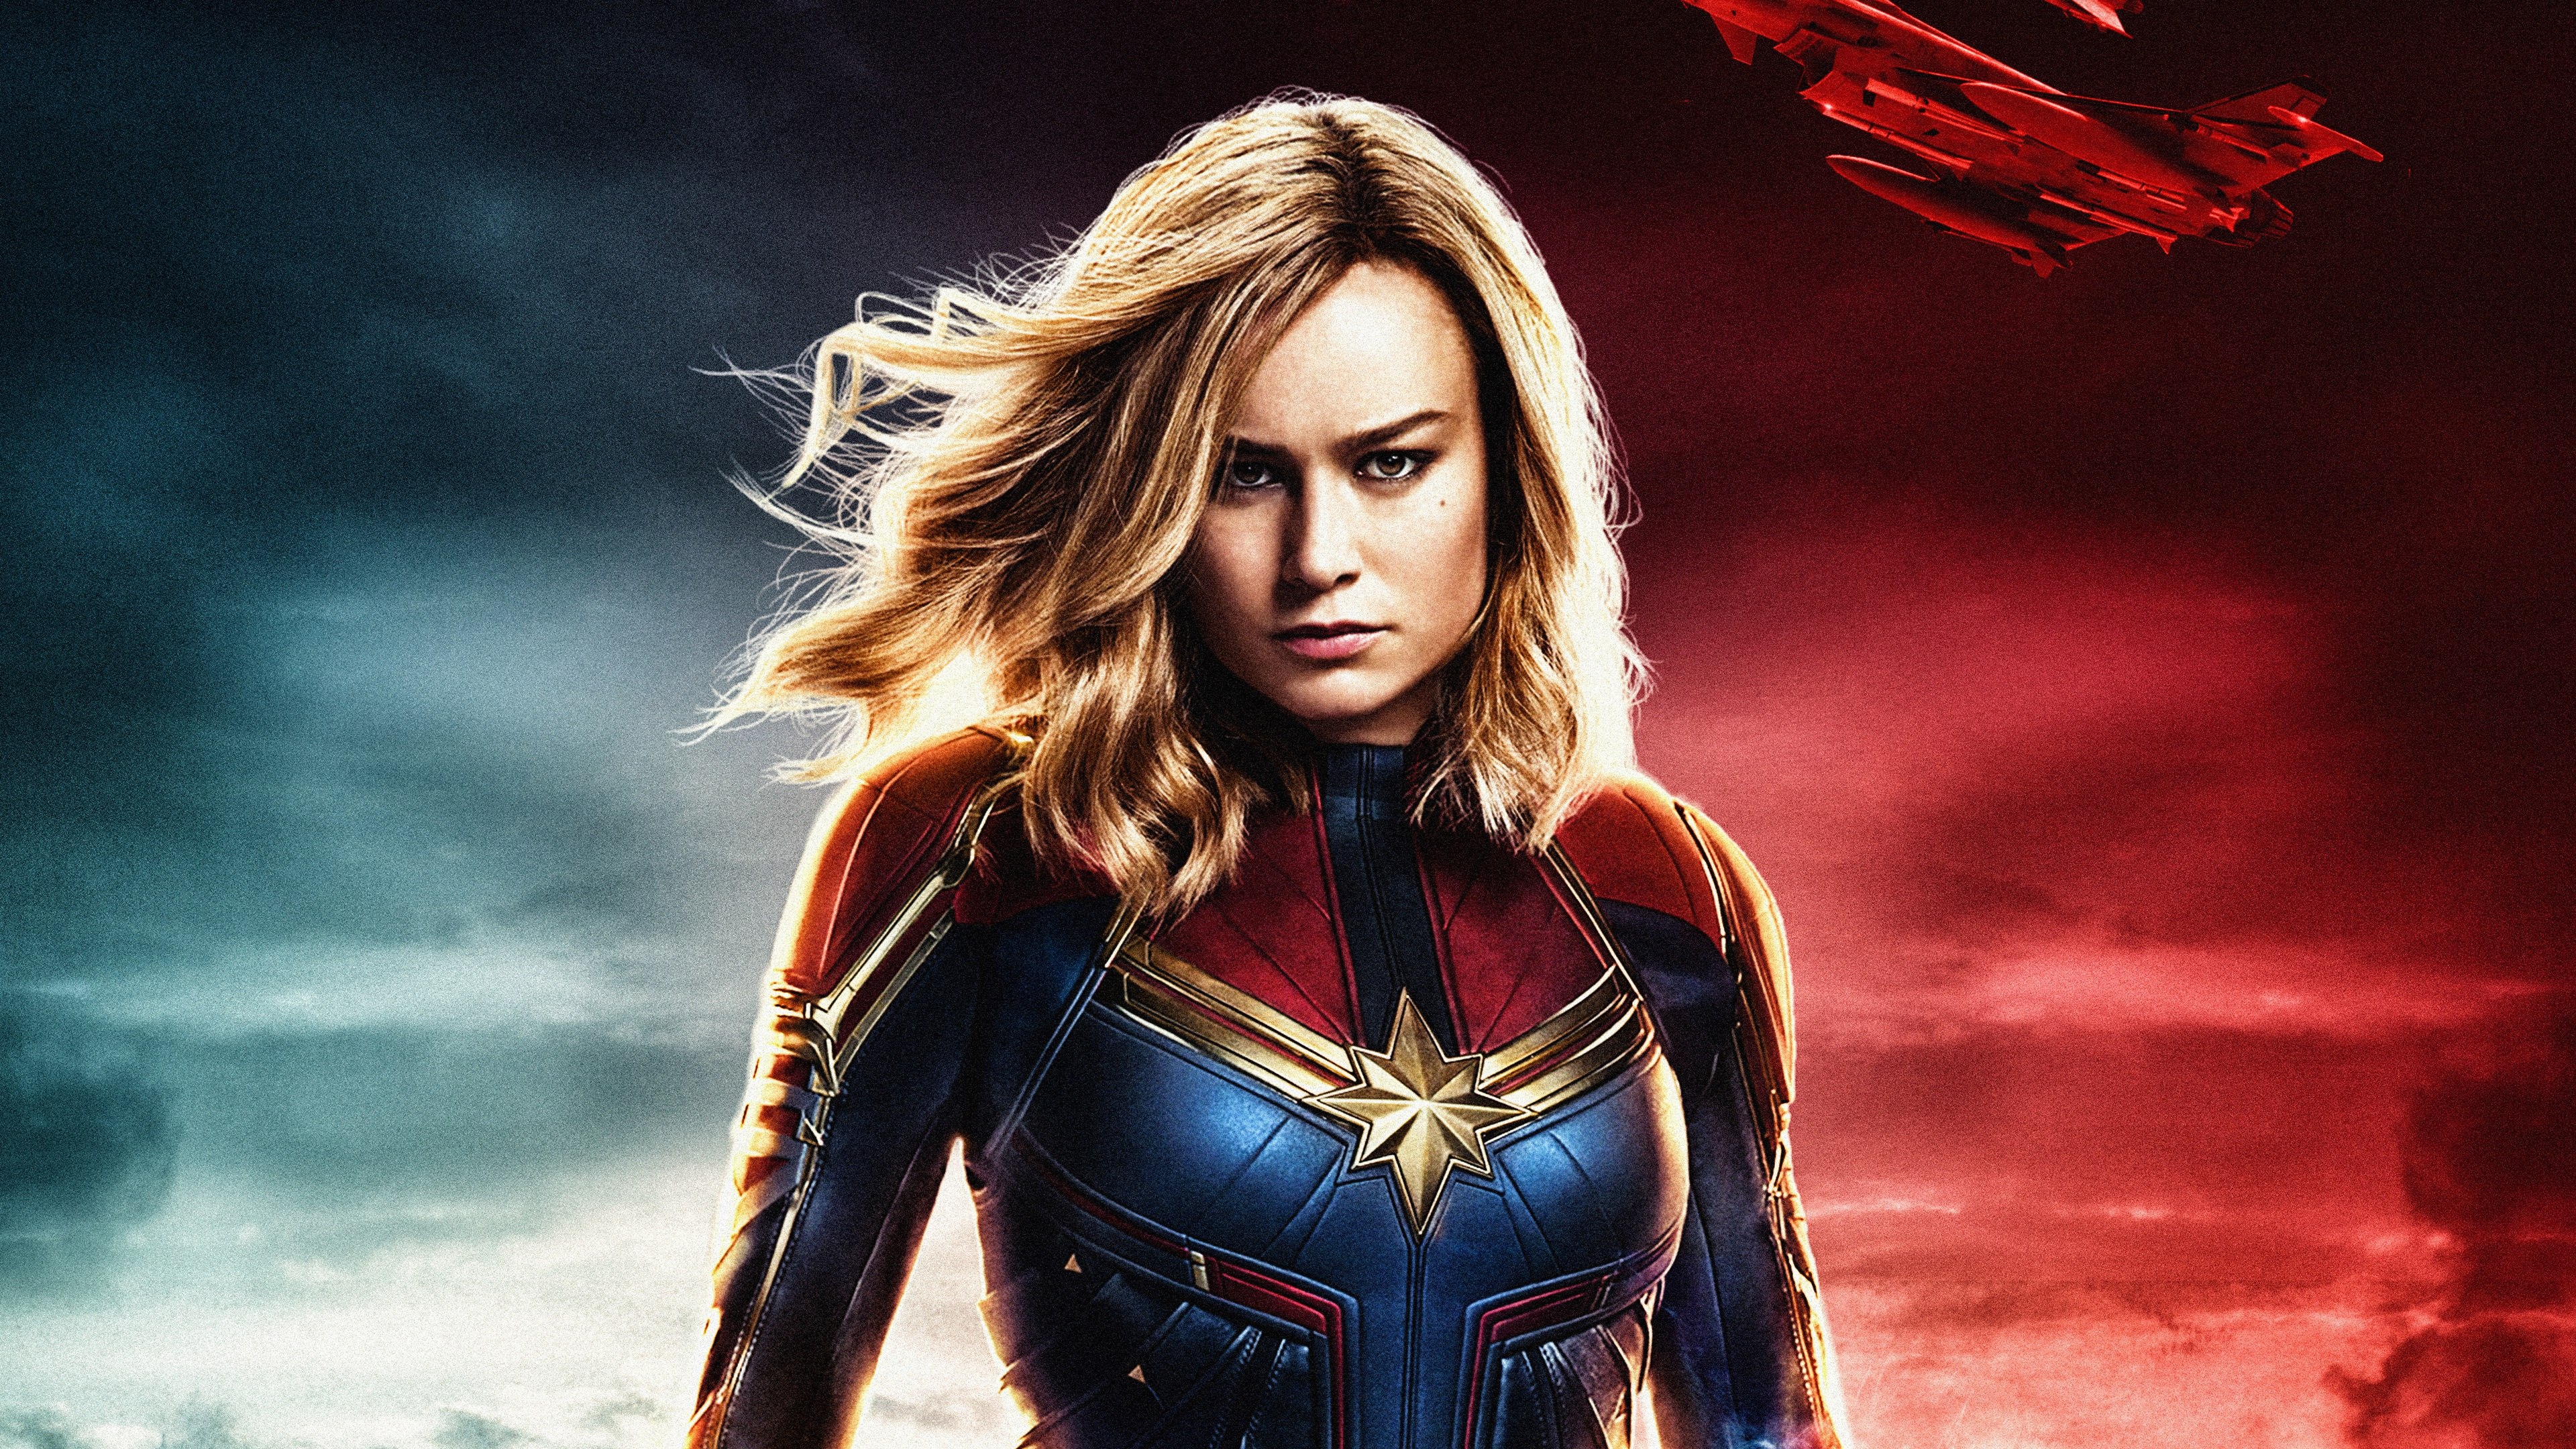 Free Download 4k Carol Danvers Captain Marvel Hd Background Images, Photos, Reviews